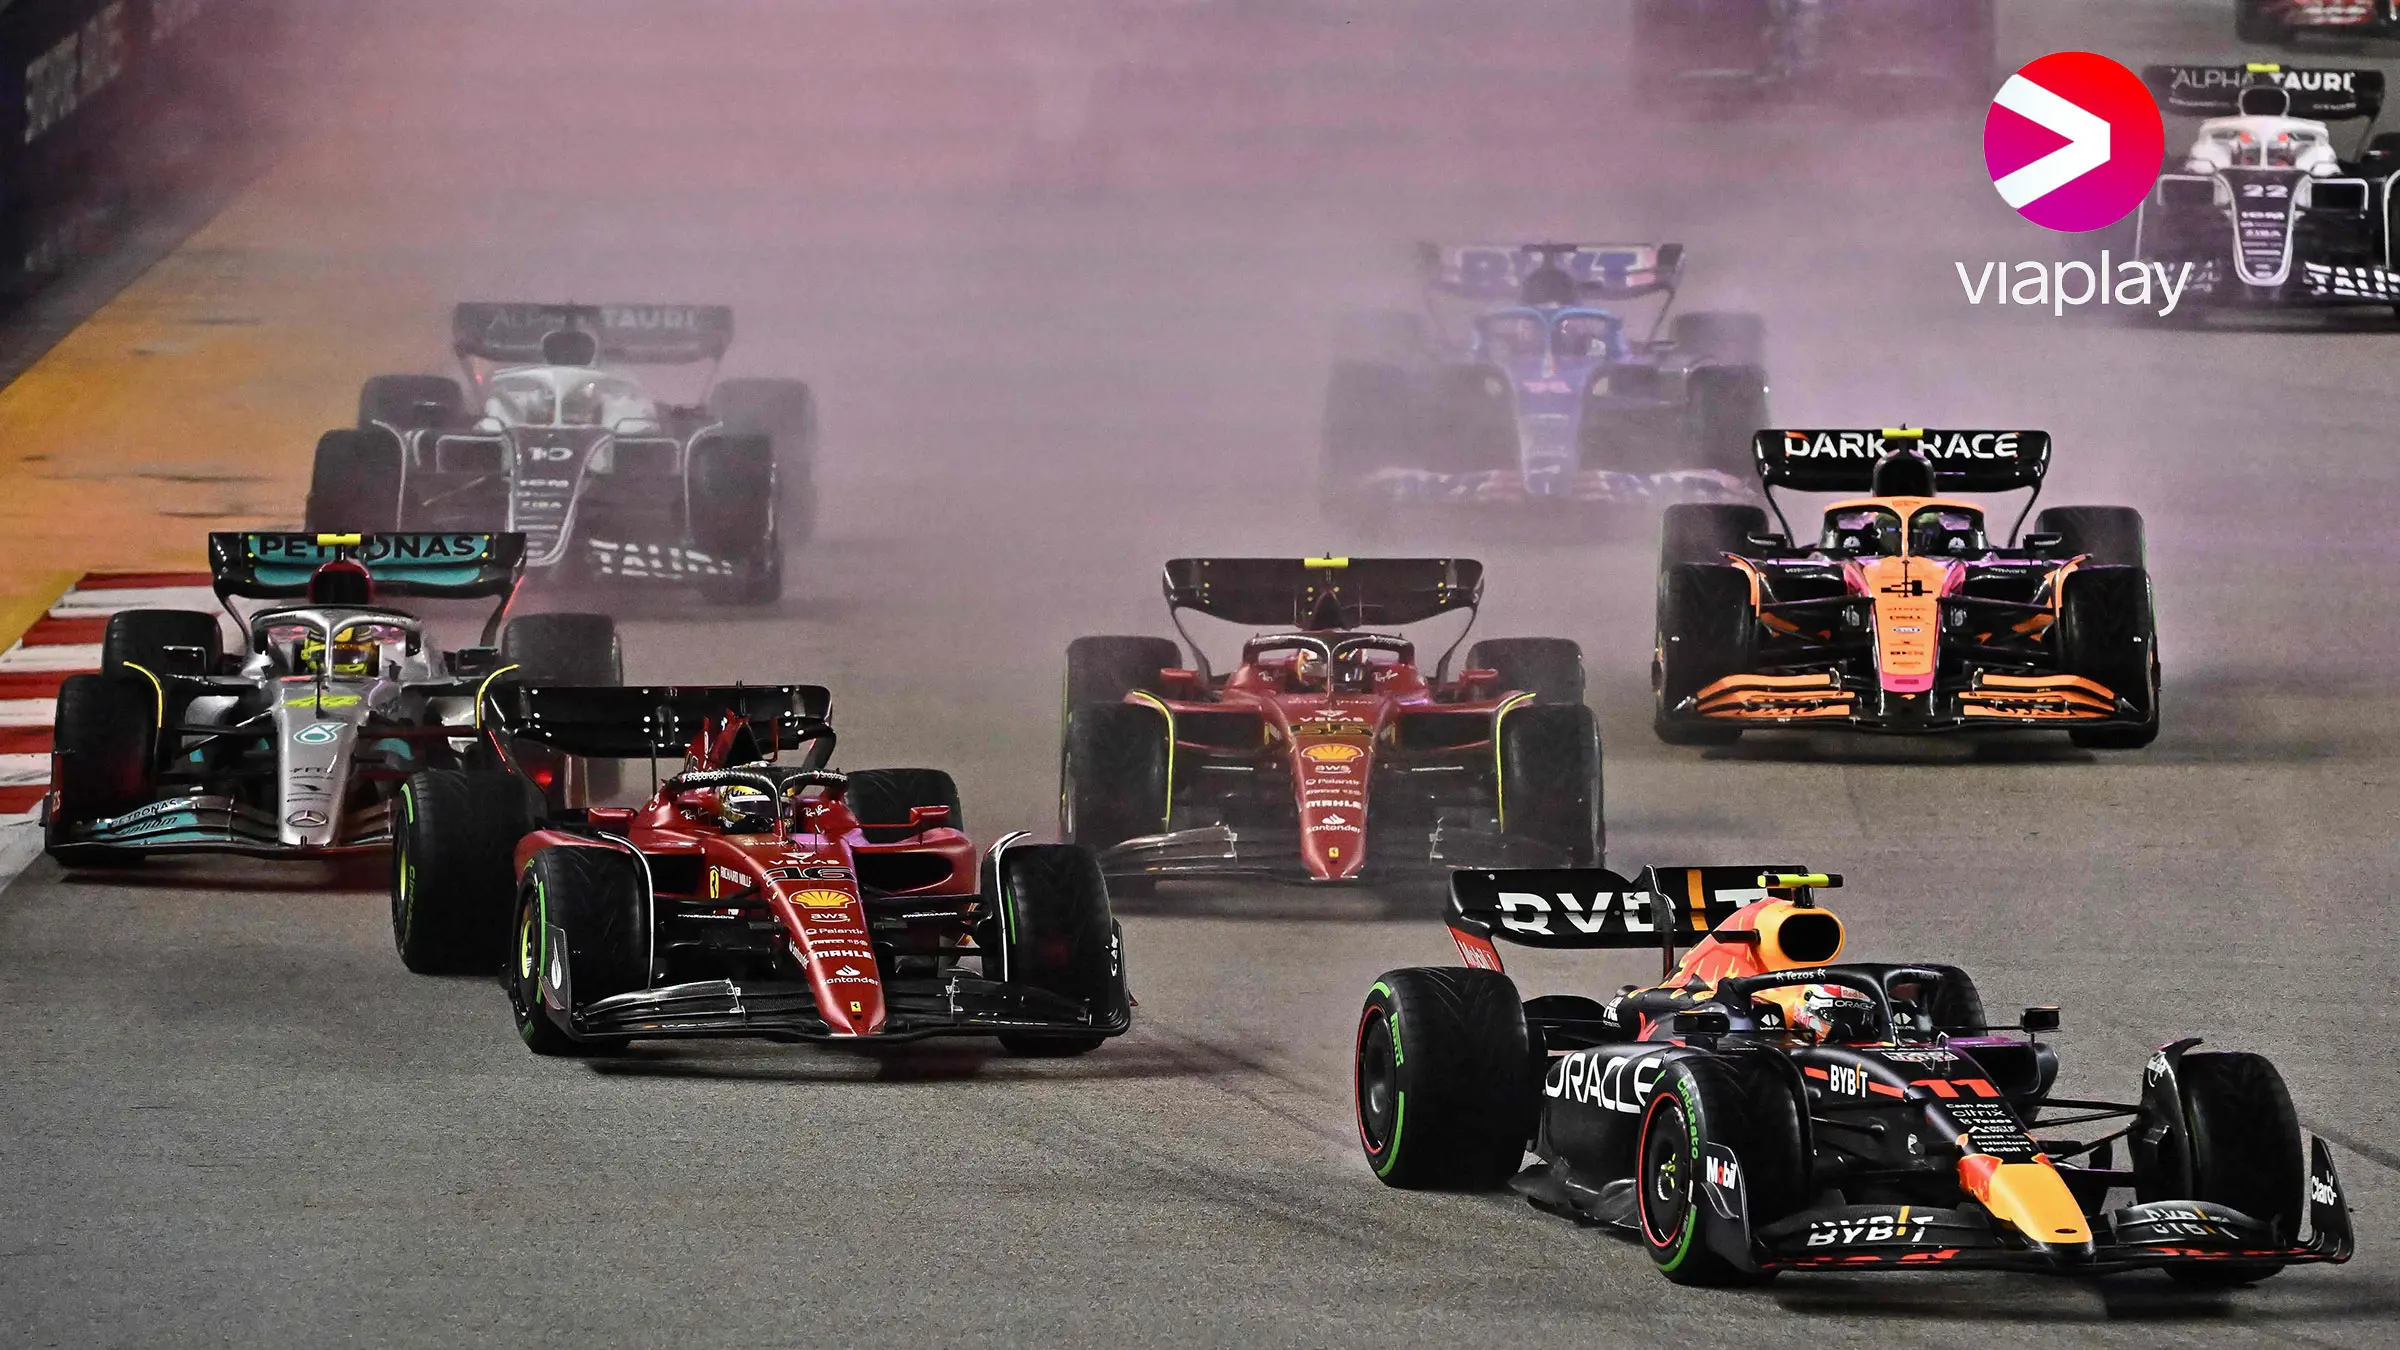 Formule 1 race in Singapore